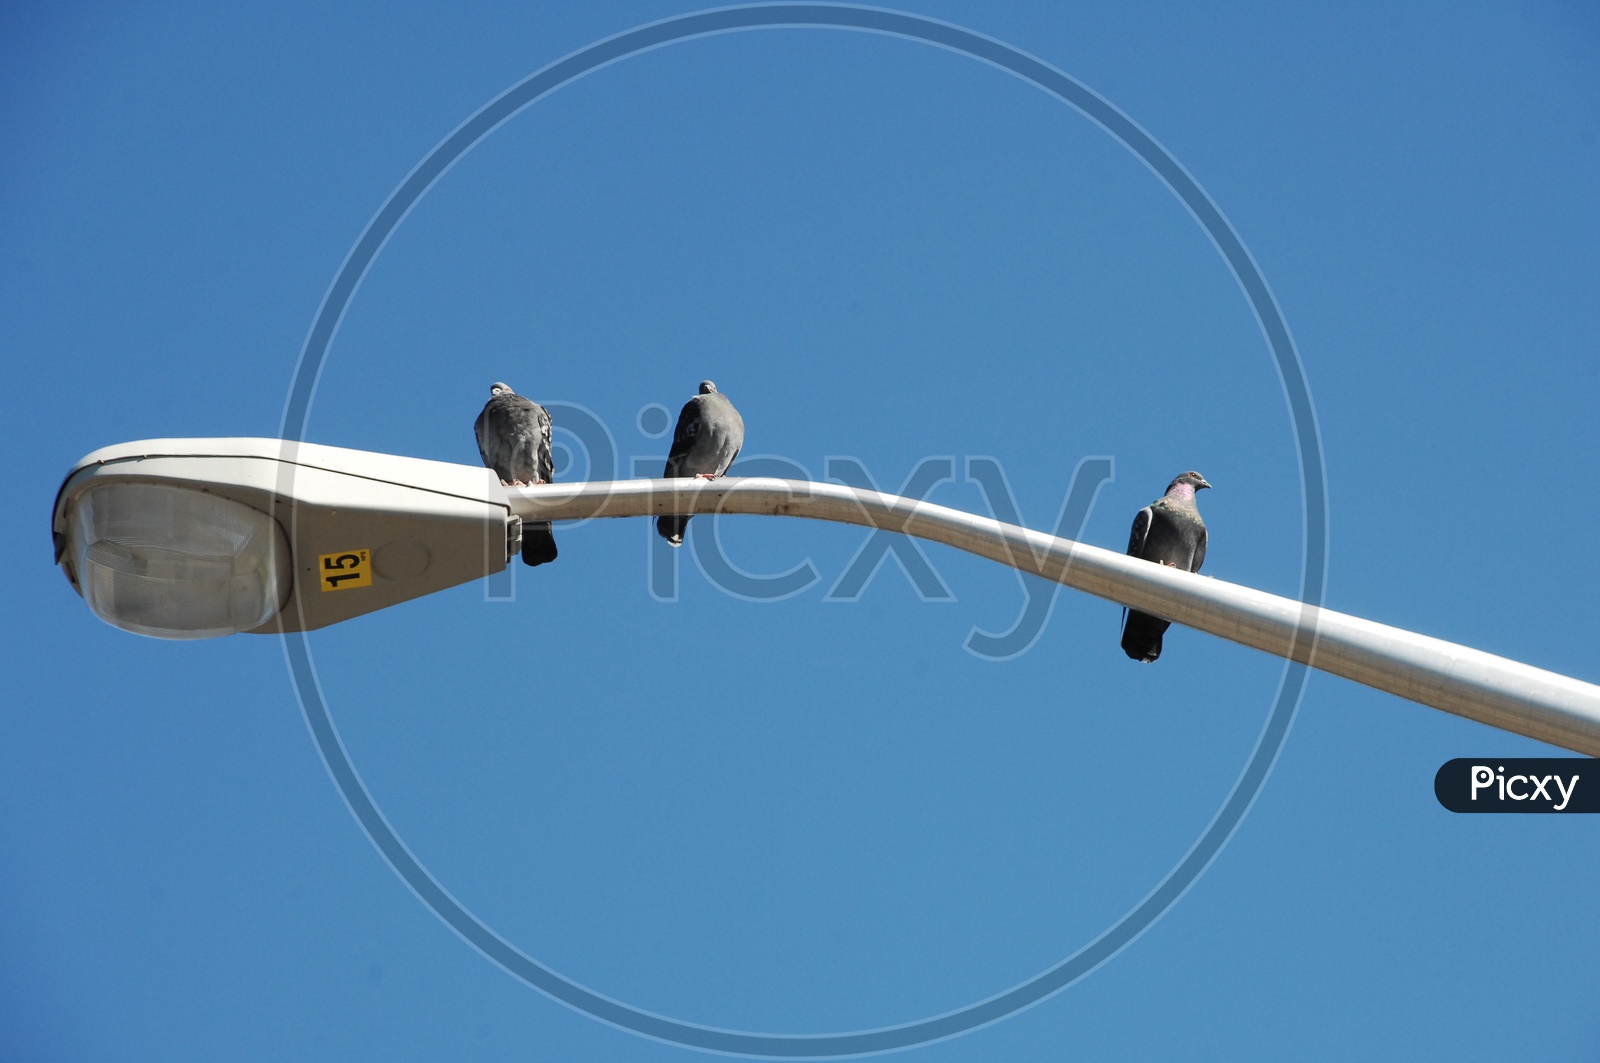 Pigeon birds on street light